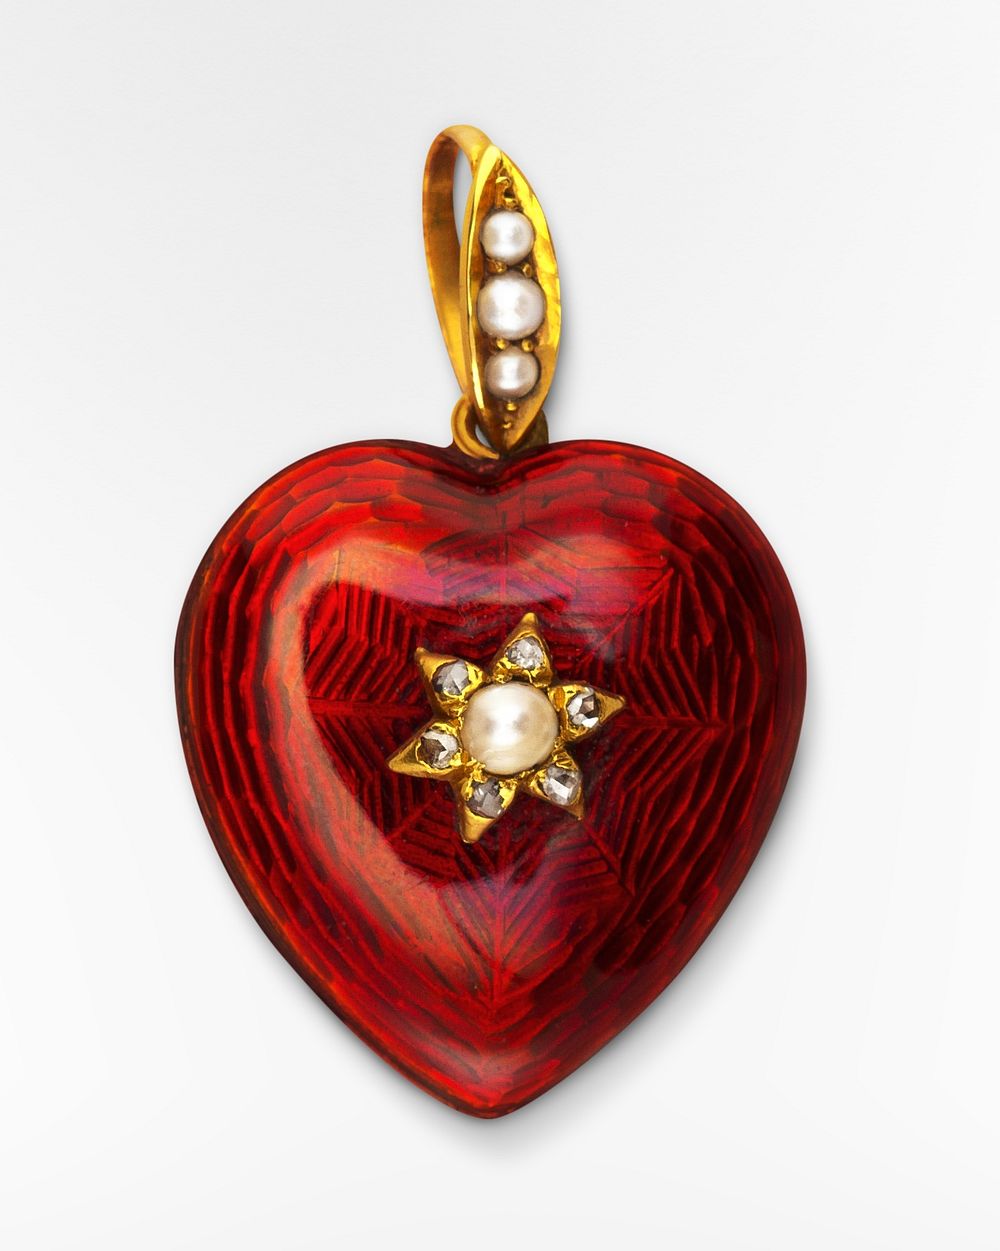 Heart locket, vintage jewelry | Free Photo - rawpixel